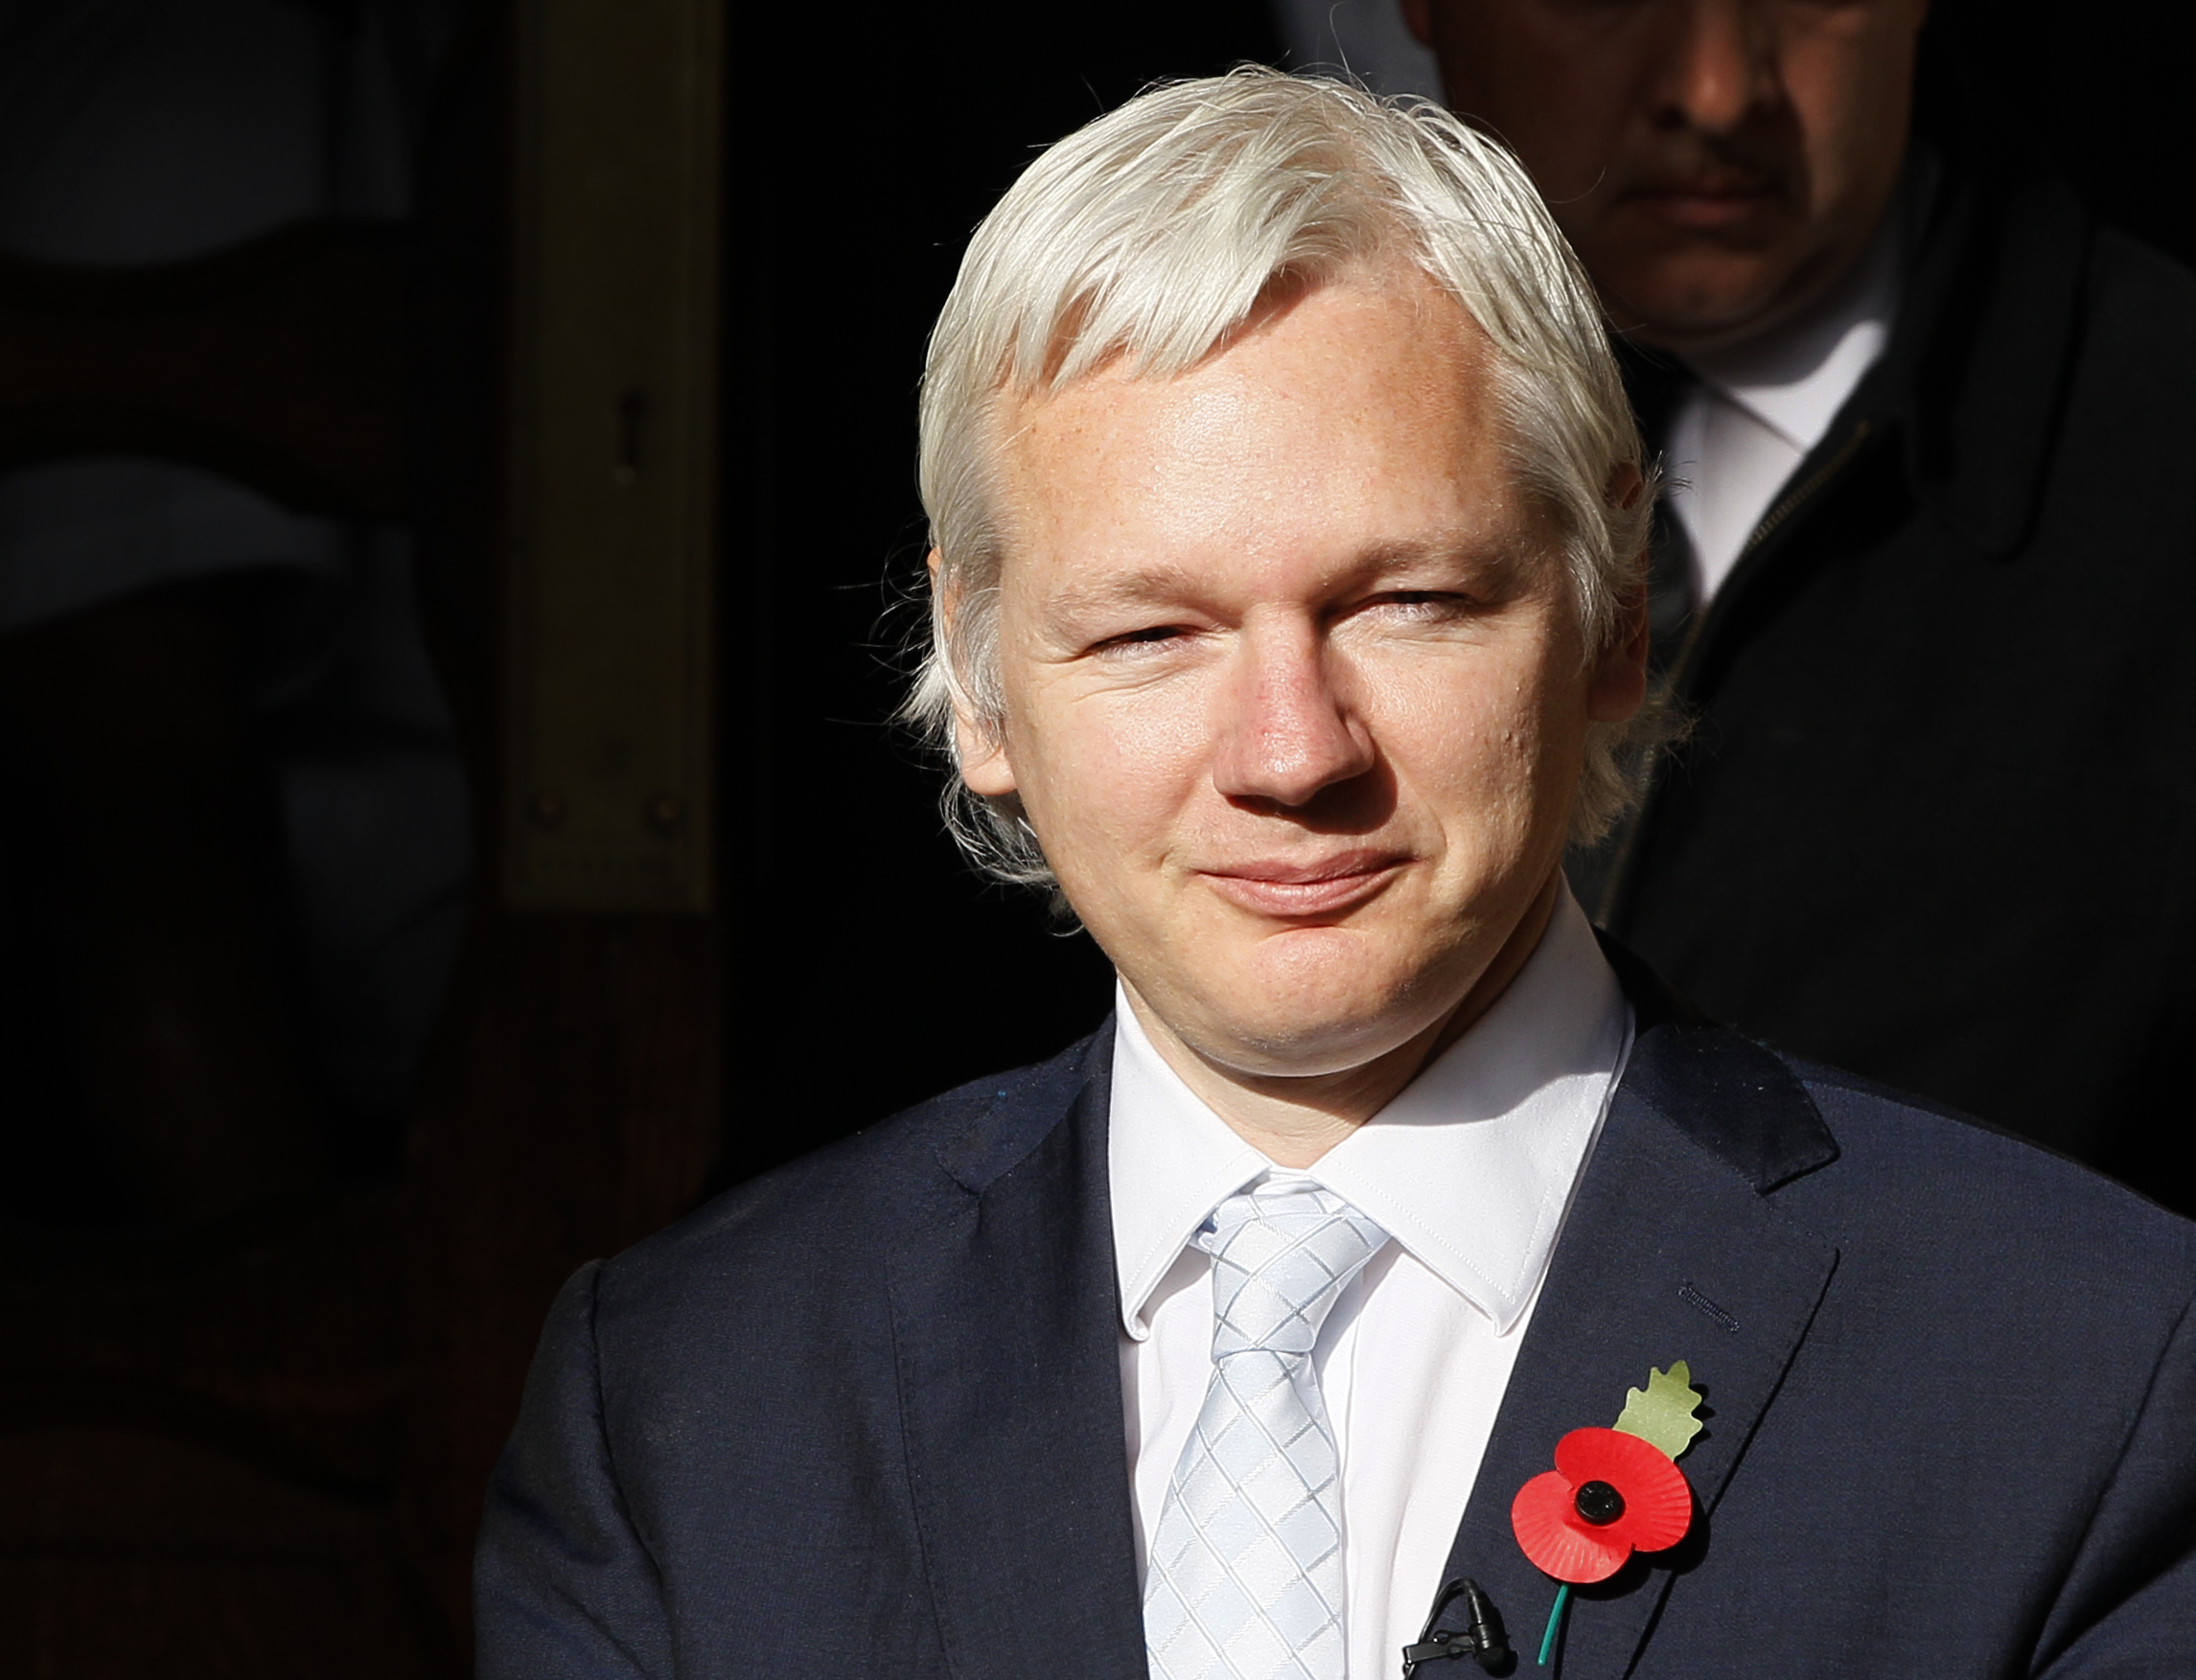 Beatrice Ask, Möte, Julian Assange, Ecuador, Utlämning, Sverige, Politisk asyl, Wikileaks, Ambassadör, Justitiedepartementet